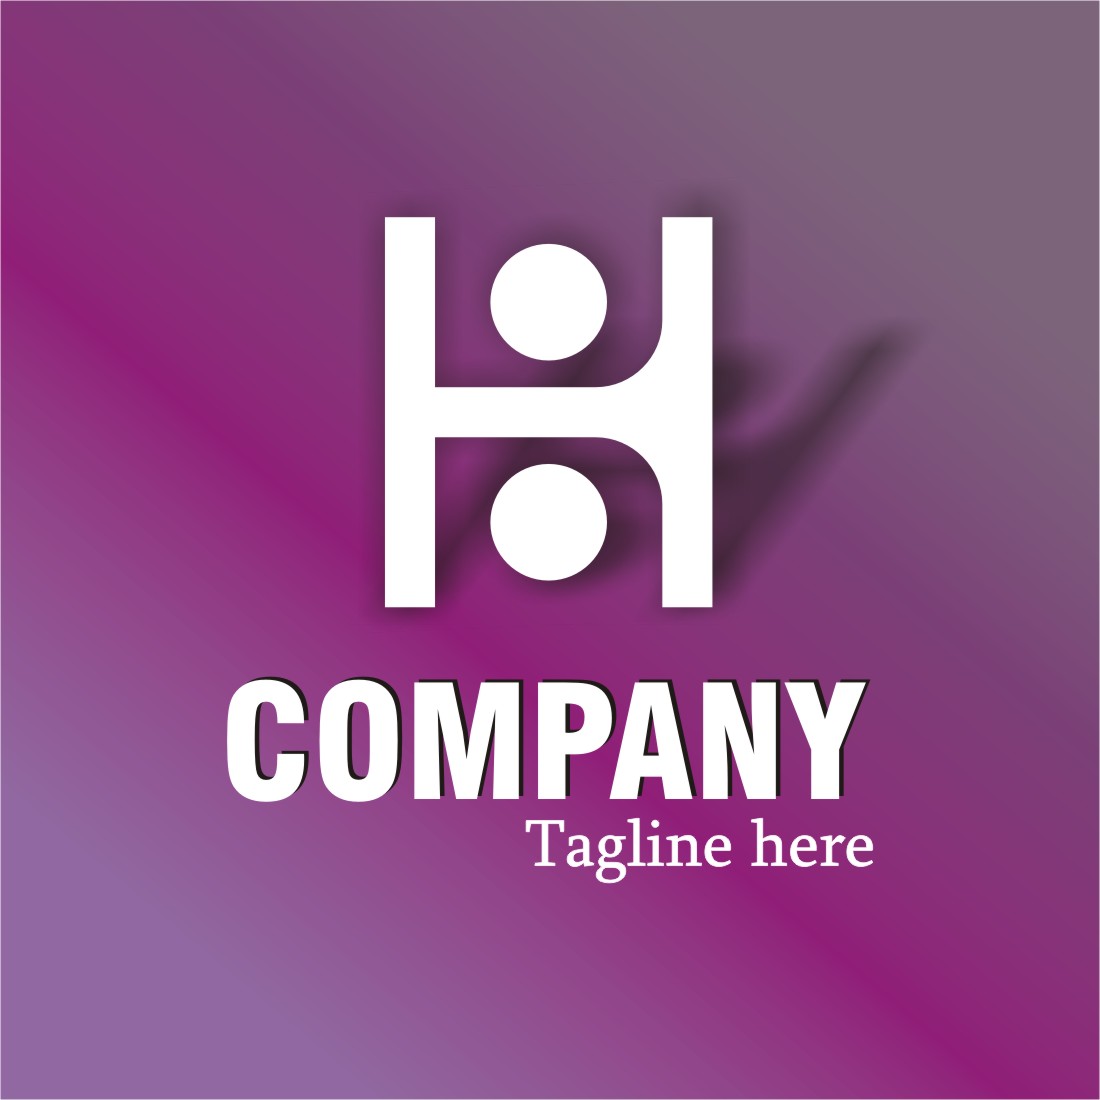 H and circle logo cover image.